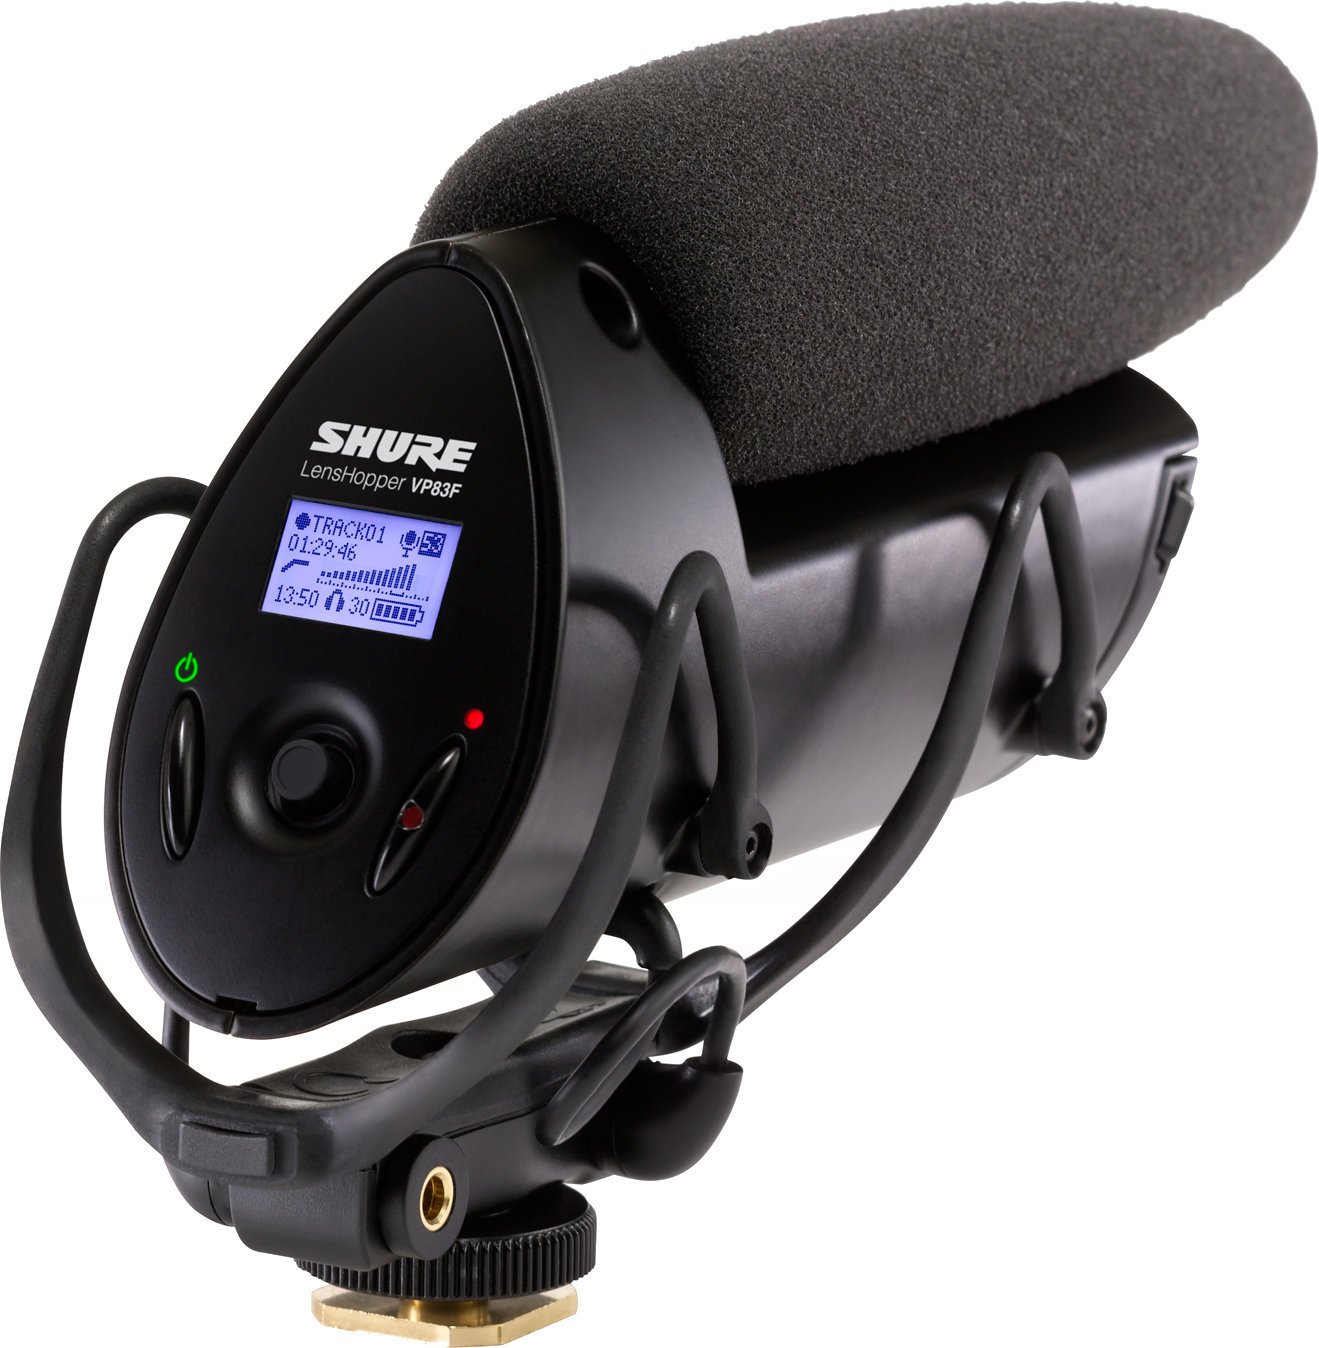 Microfono video Shure VP83F LensHopper